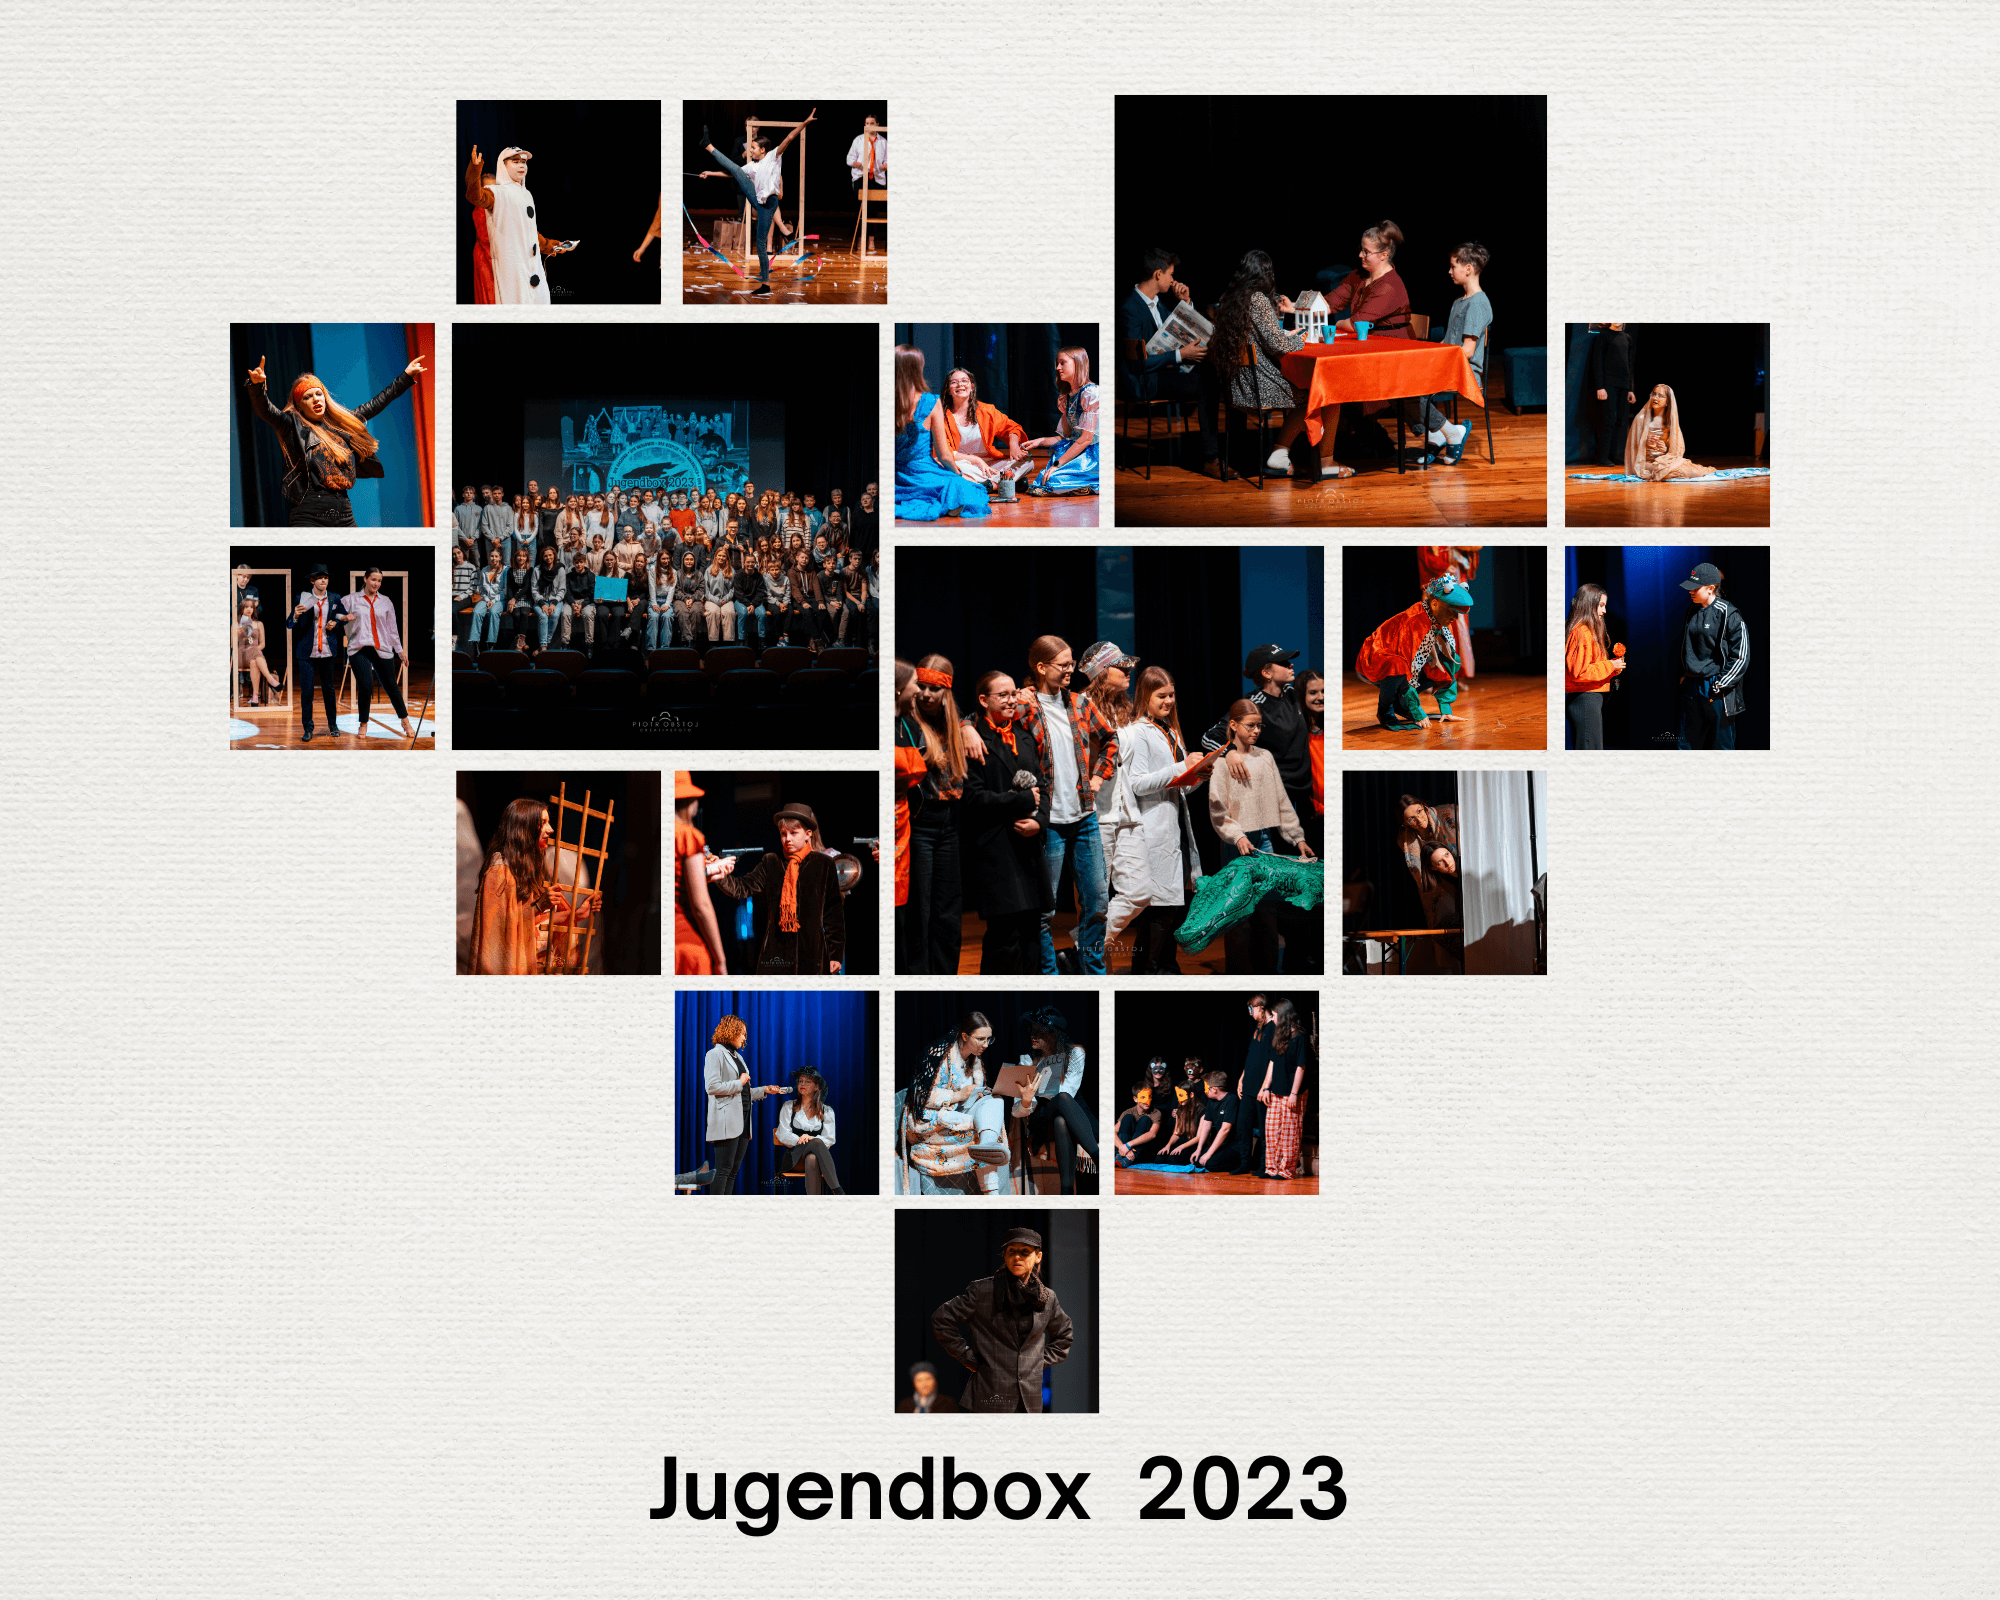 Jugendbox – teatralny projekt pełen sukcesów